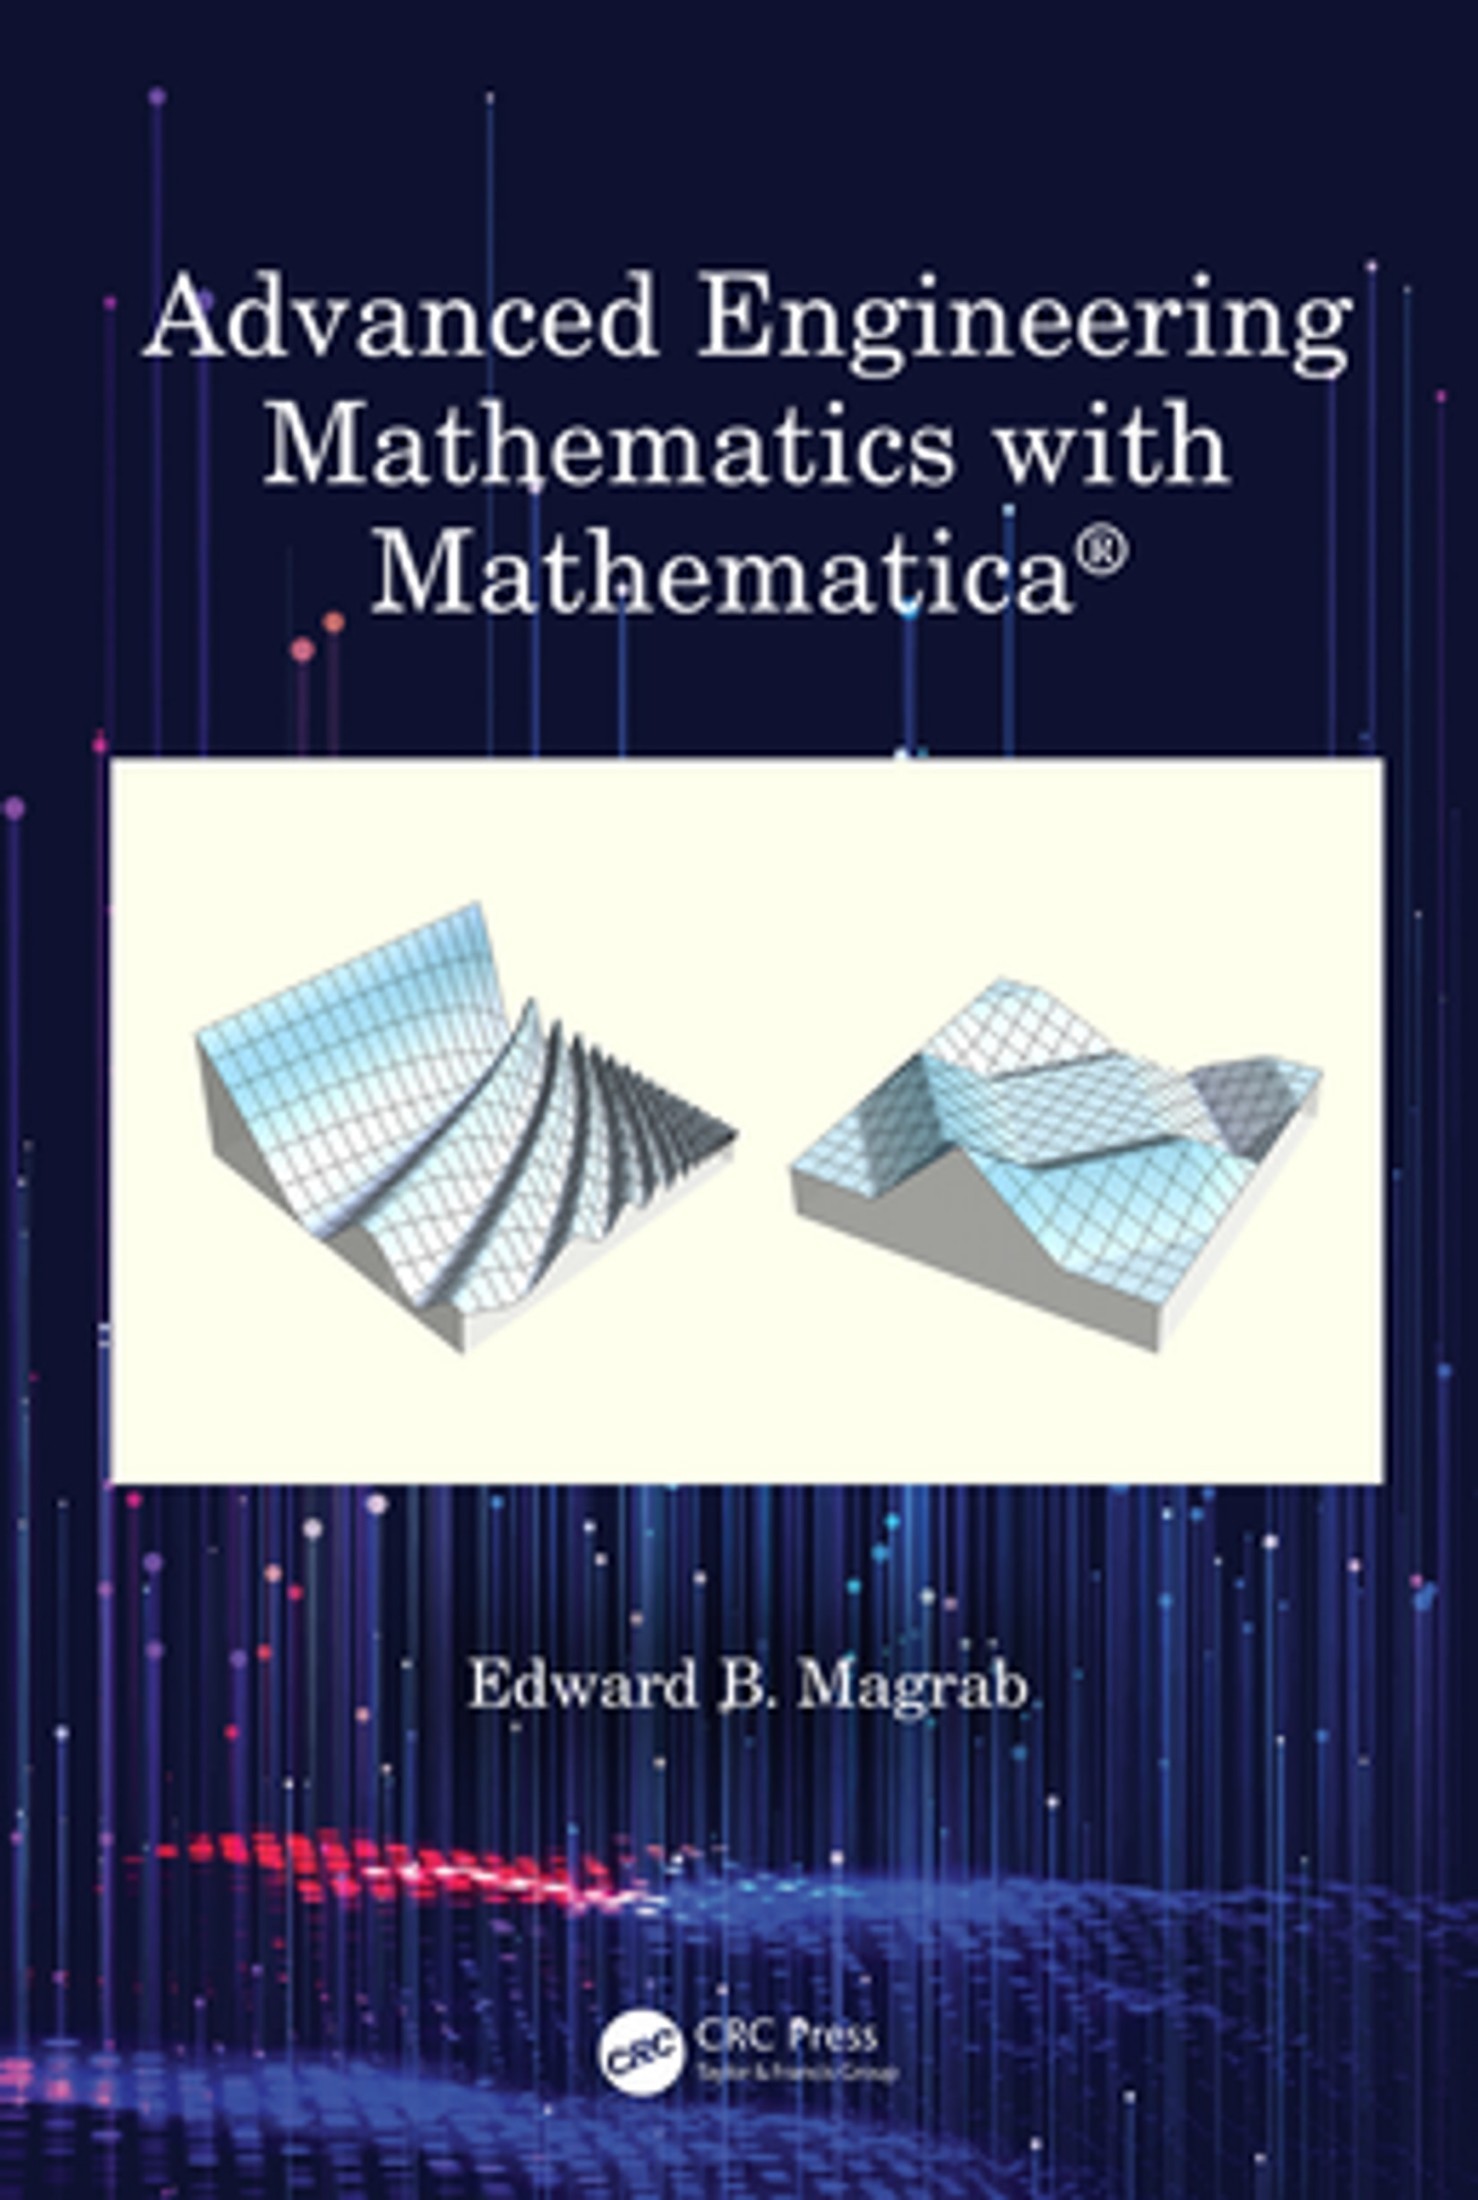 Advanced Engineering Mathematics with Mathematica®